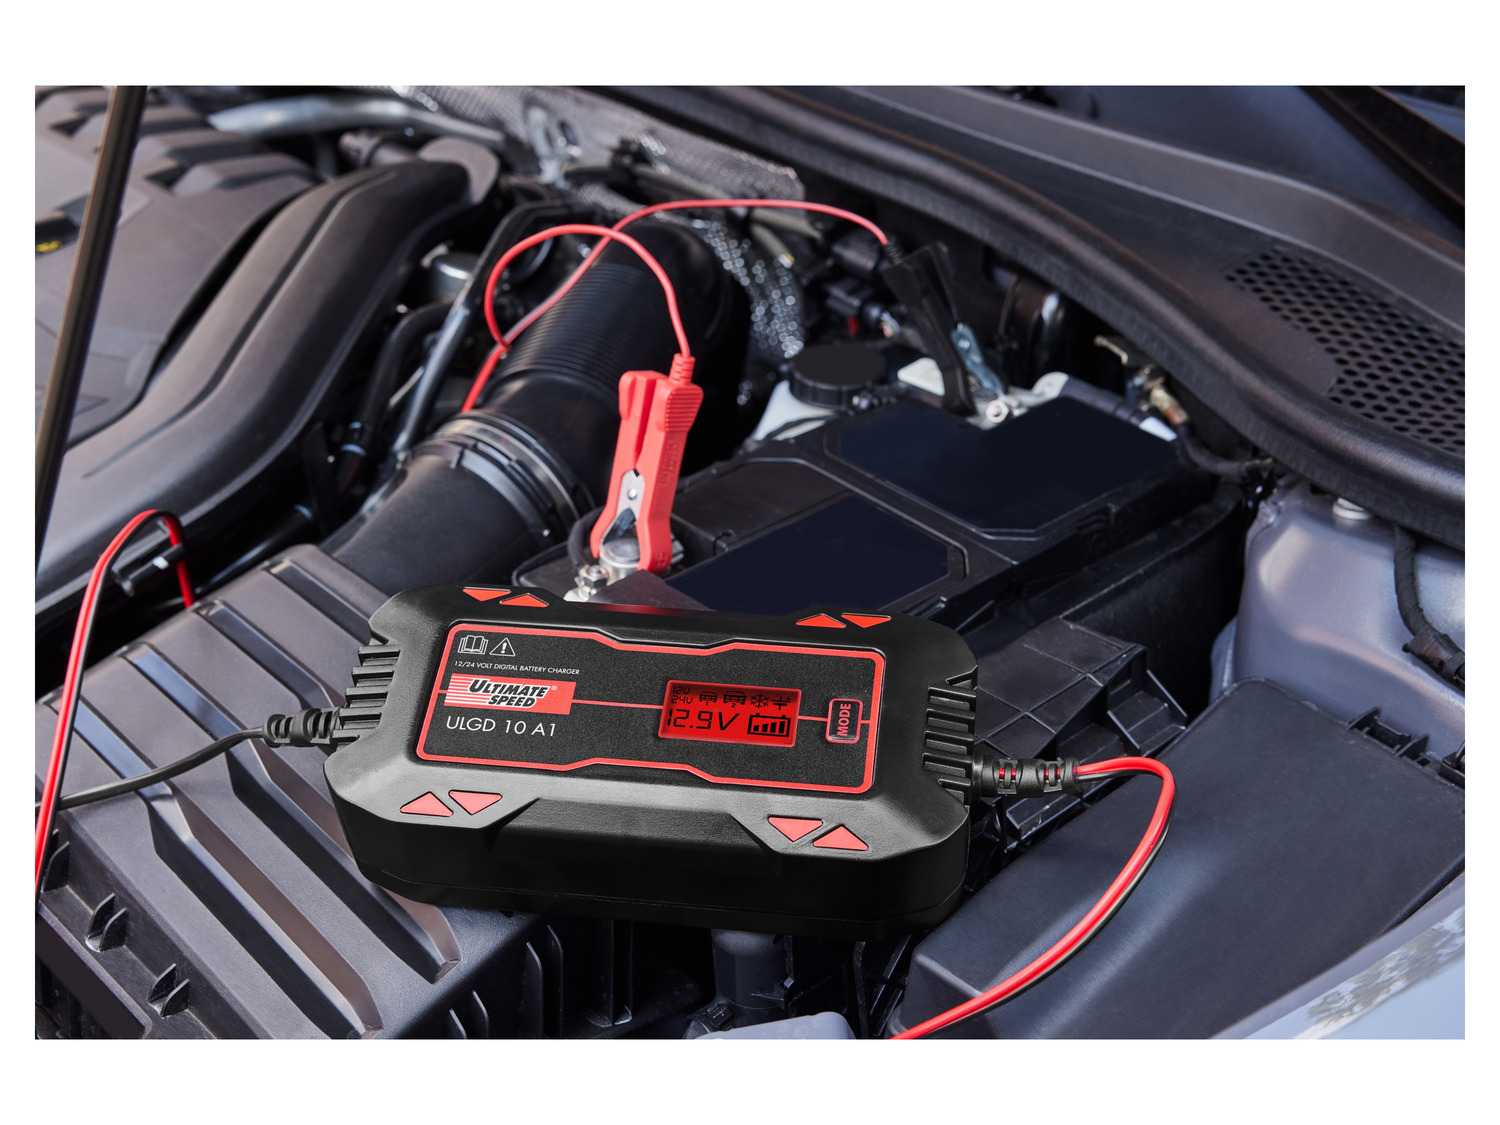 ULTIMATE SPEED® Chargeur de batterie pour voiture ULGD…